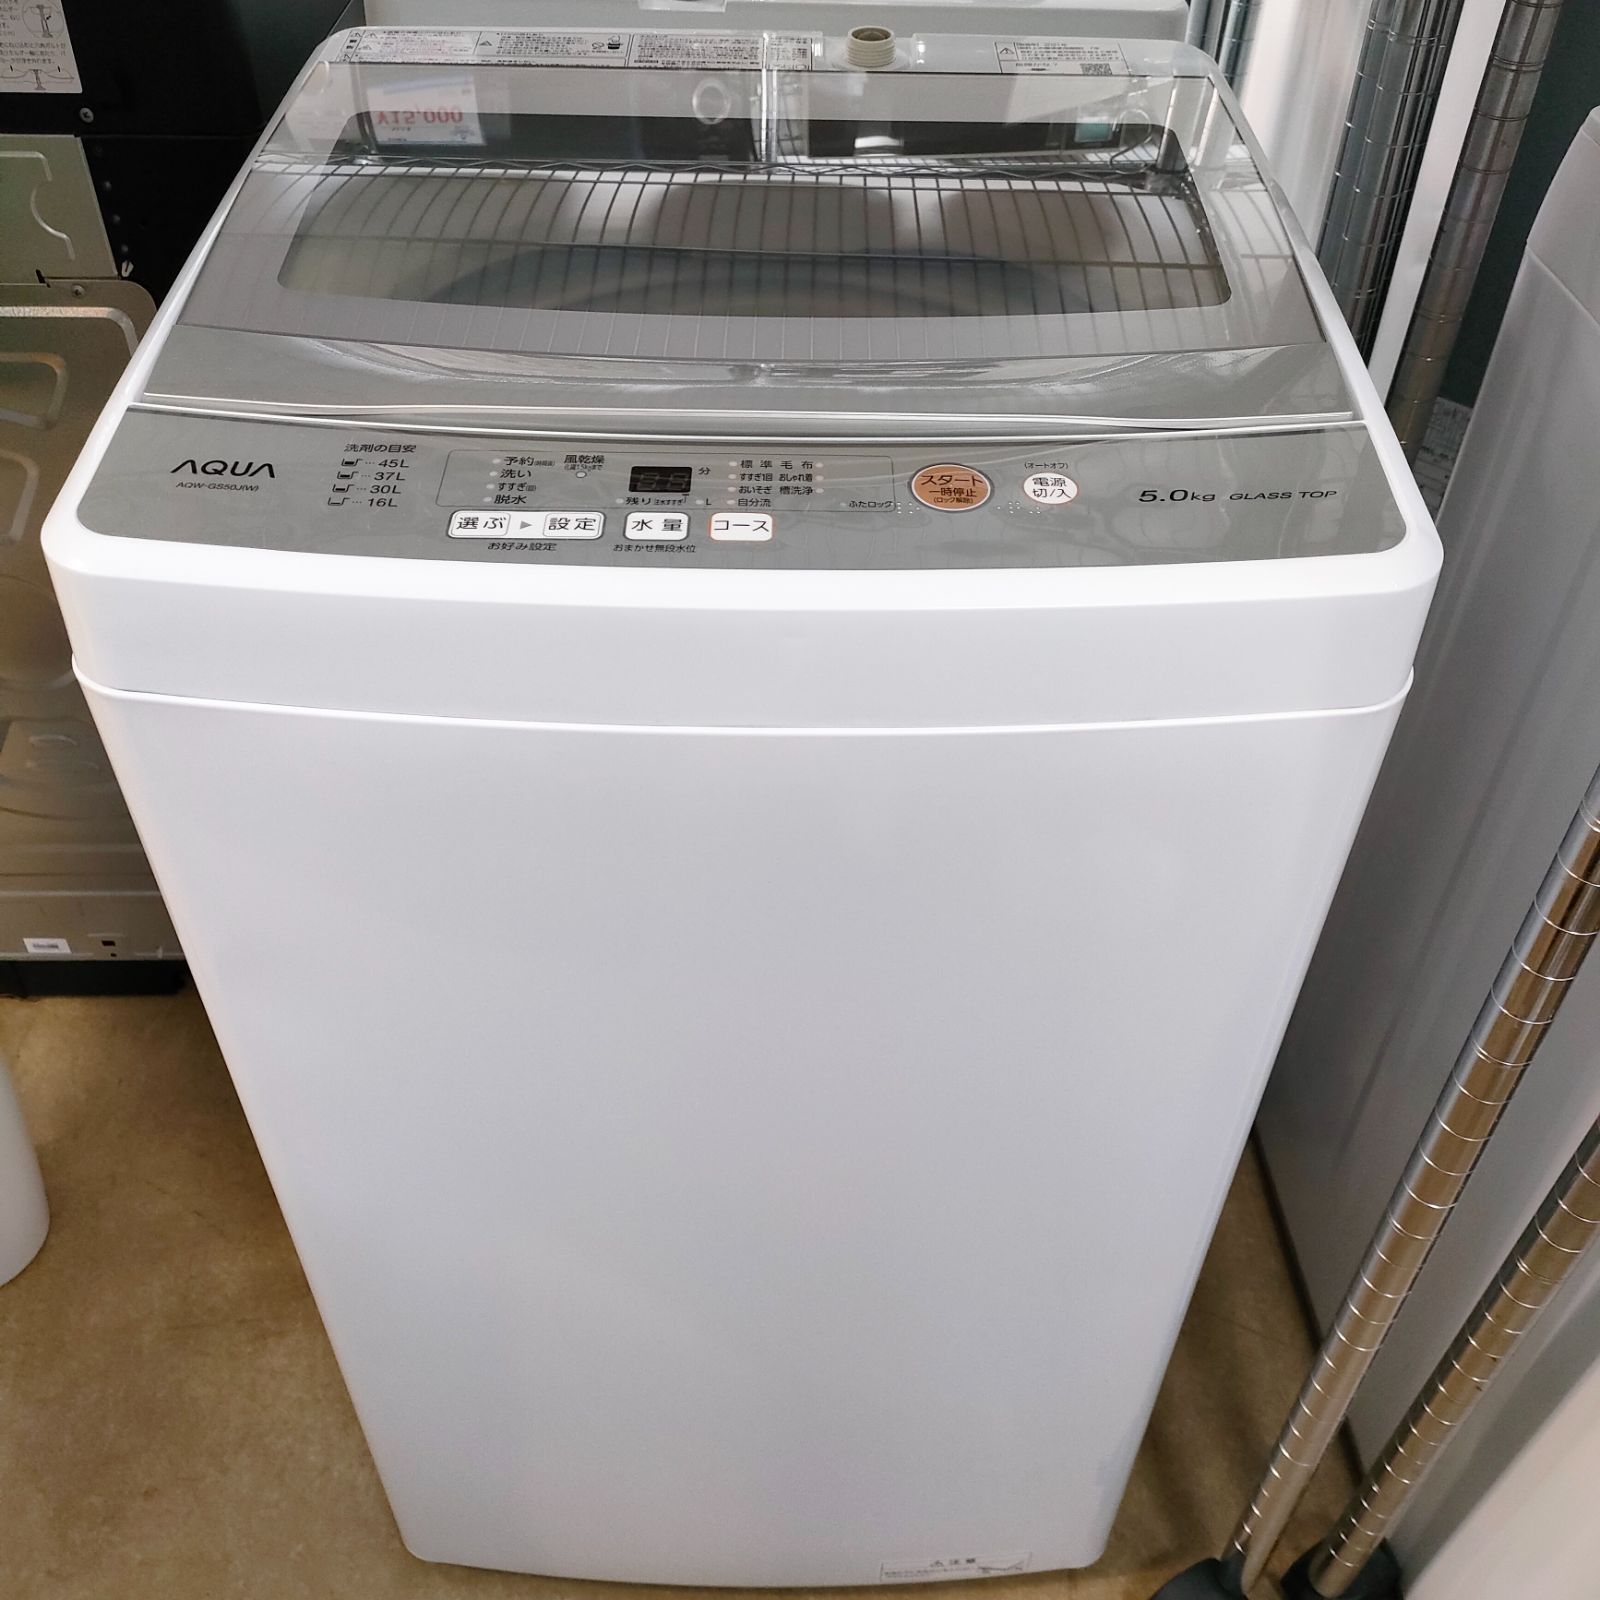 2021年製】AQUA アクア AQW-GS50J(W) 洗濯機 2021年製 5.0Kg - 生活家電